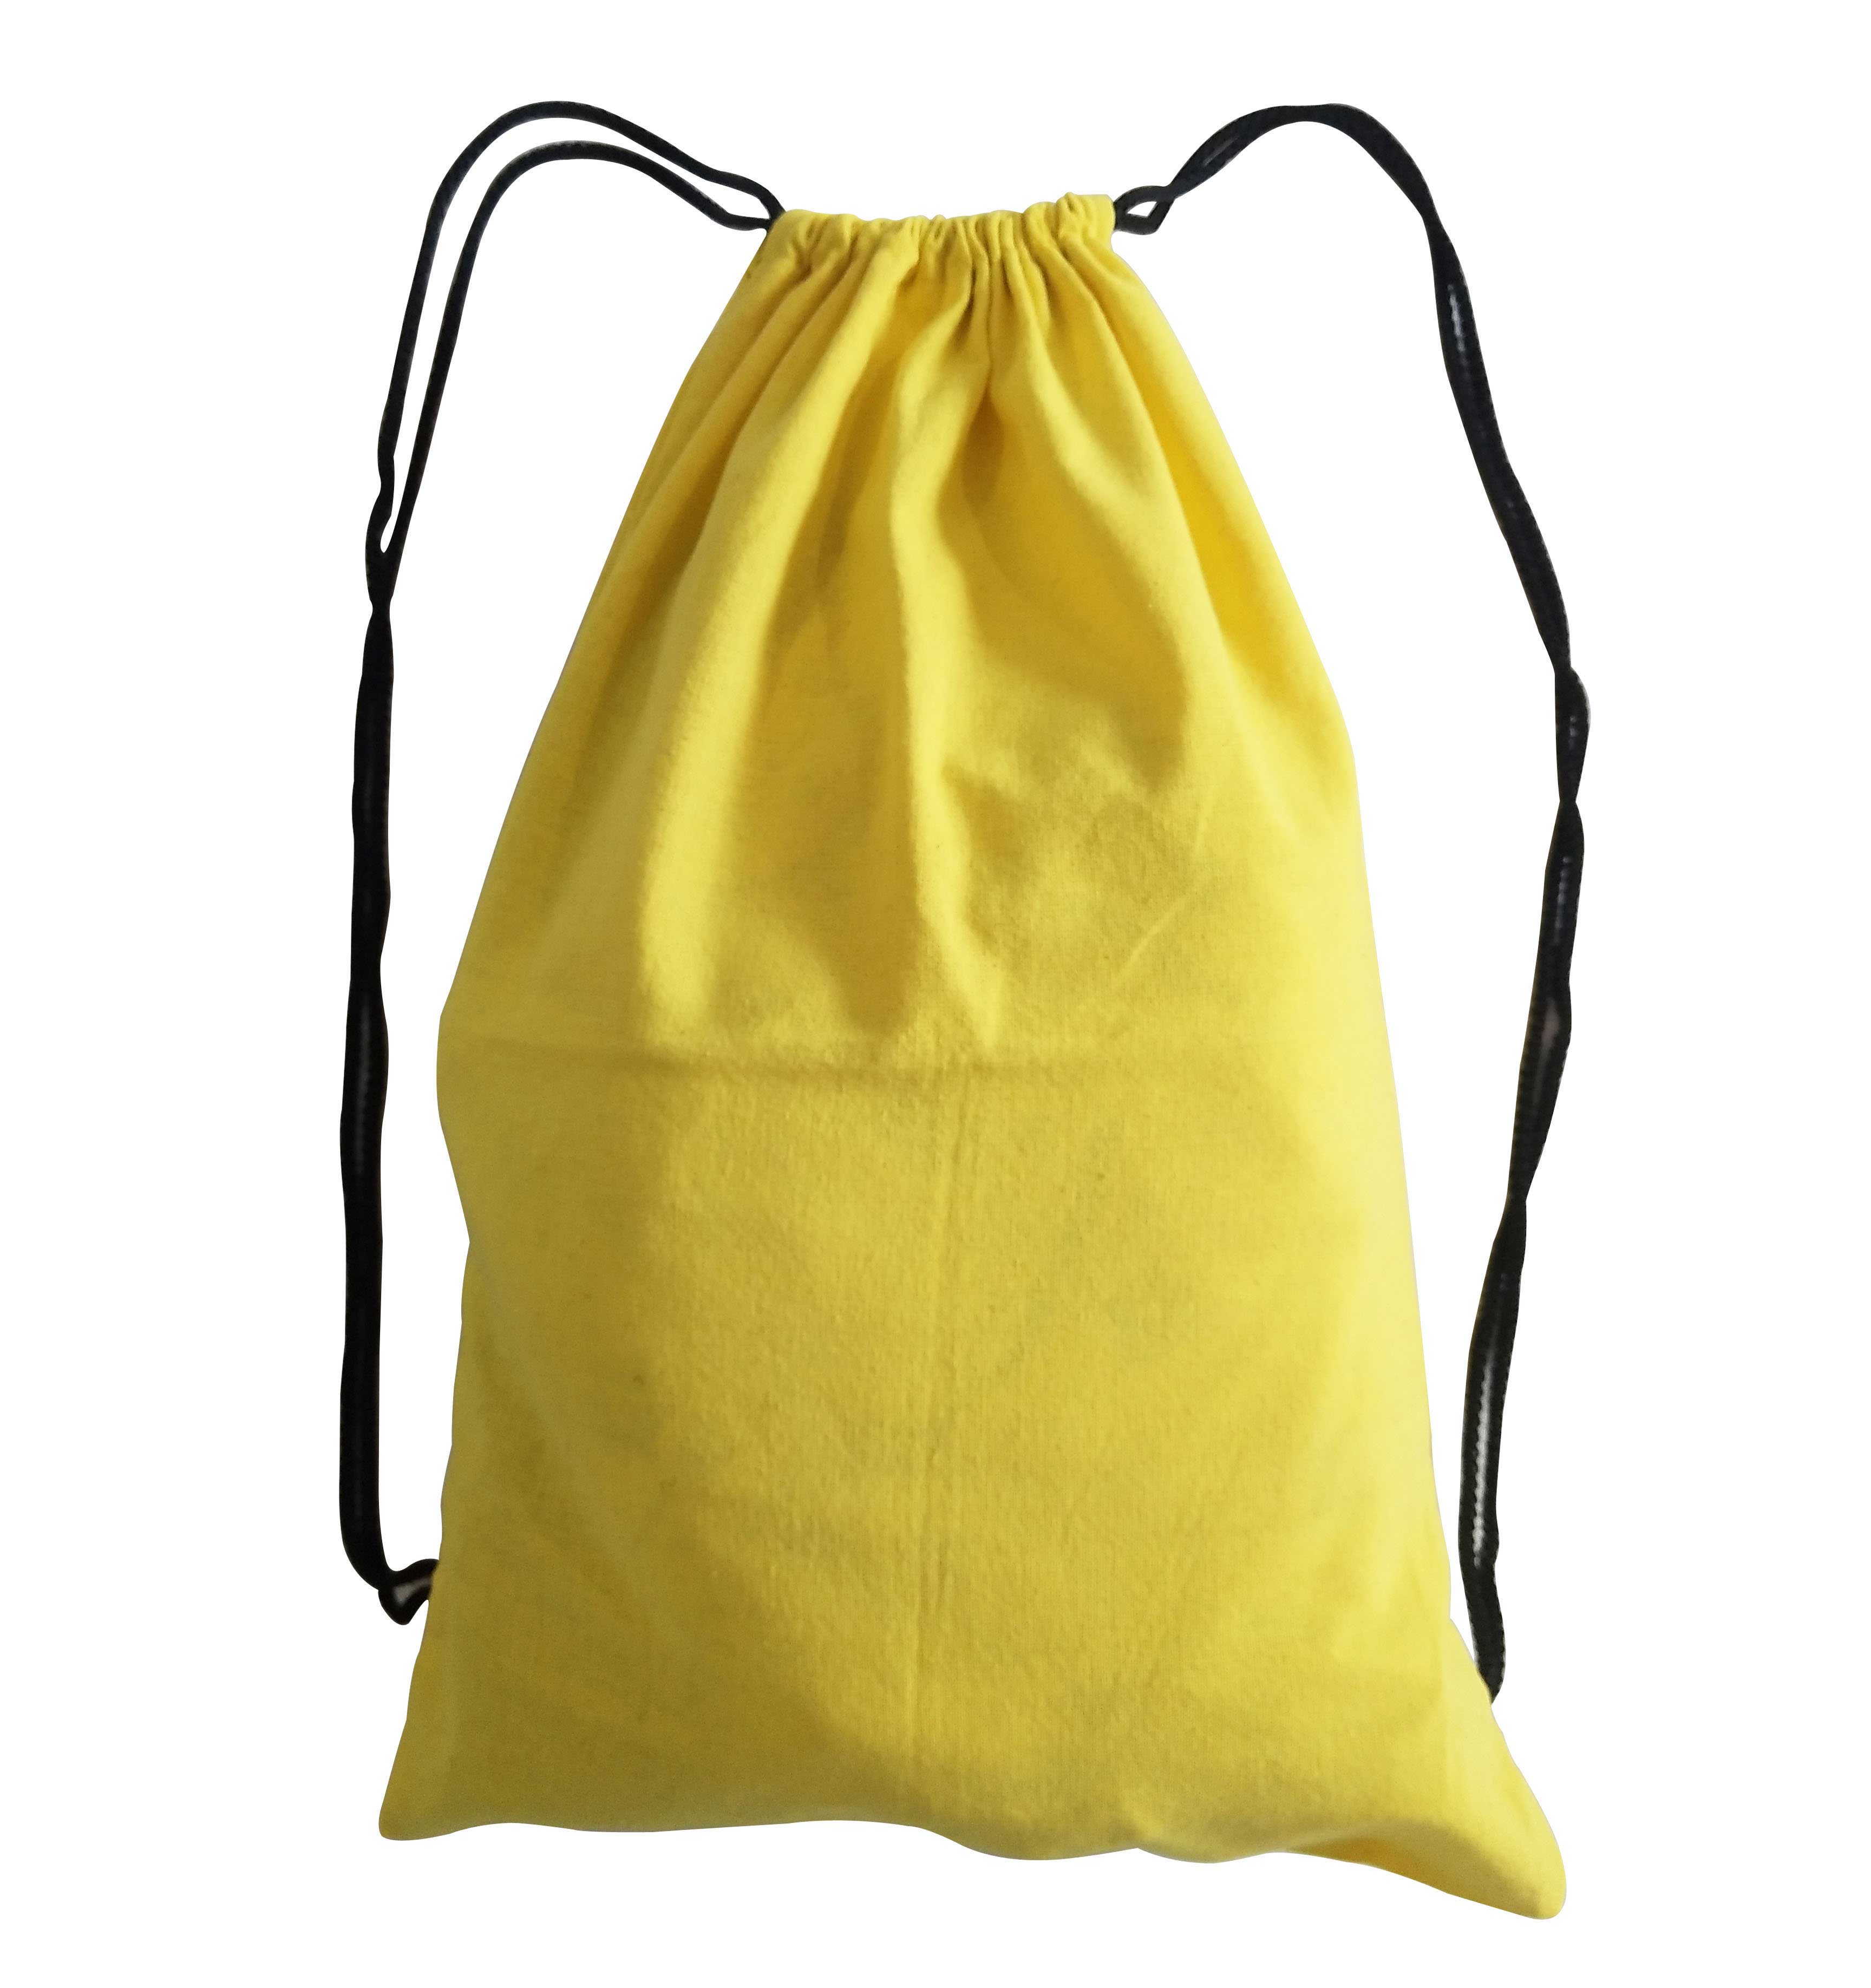 Bag Fabric | The Bag Workshop